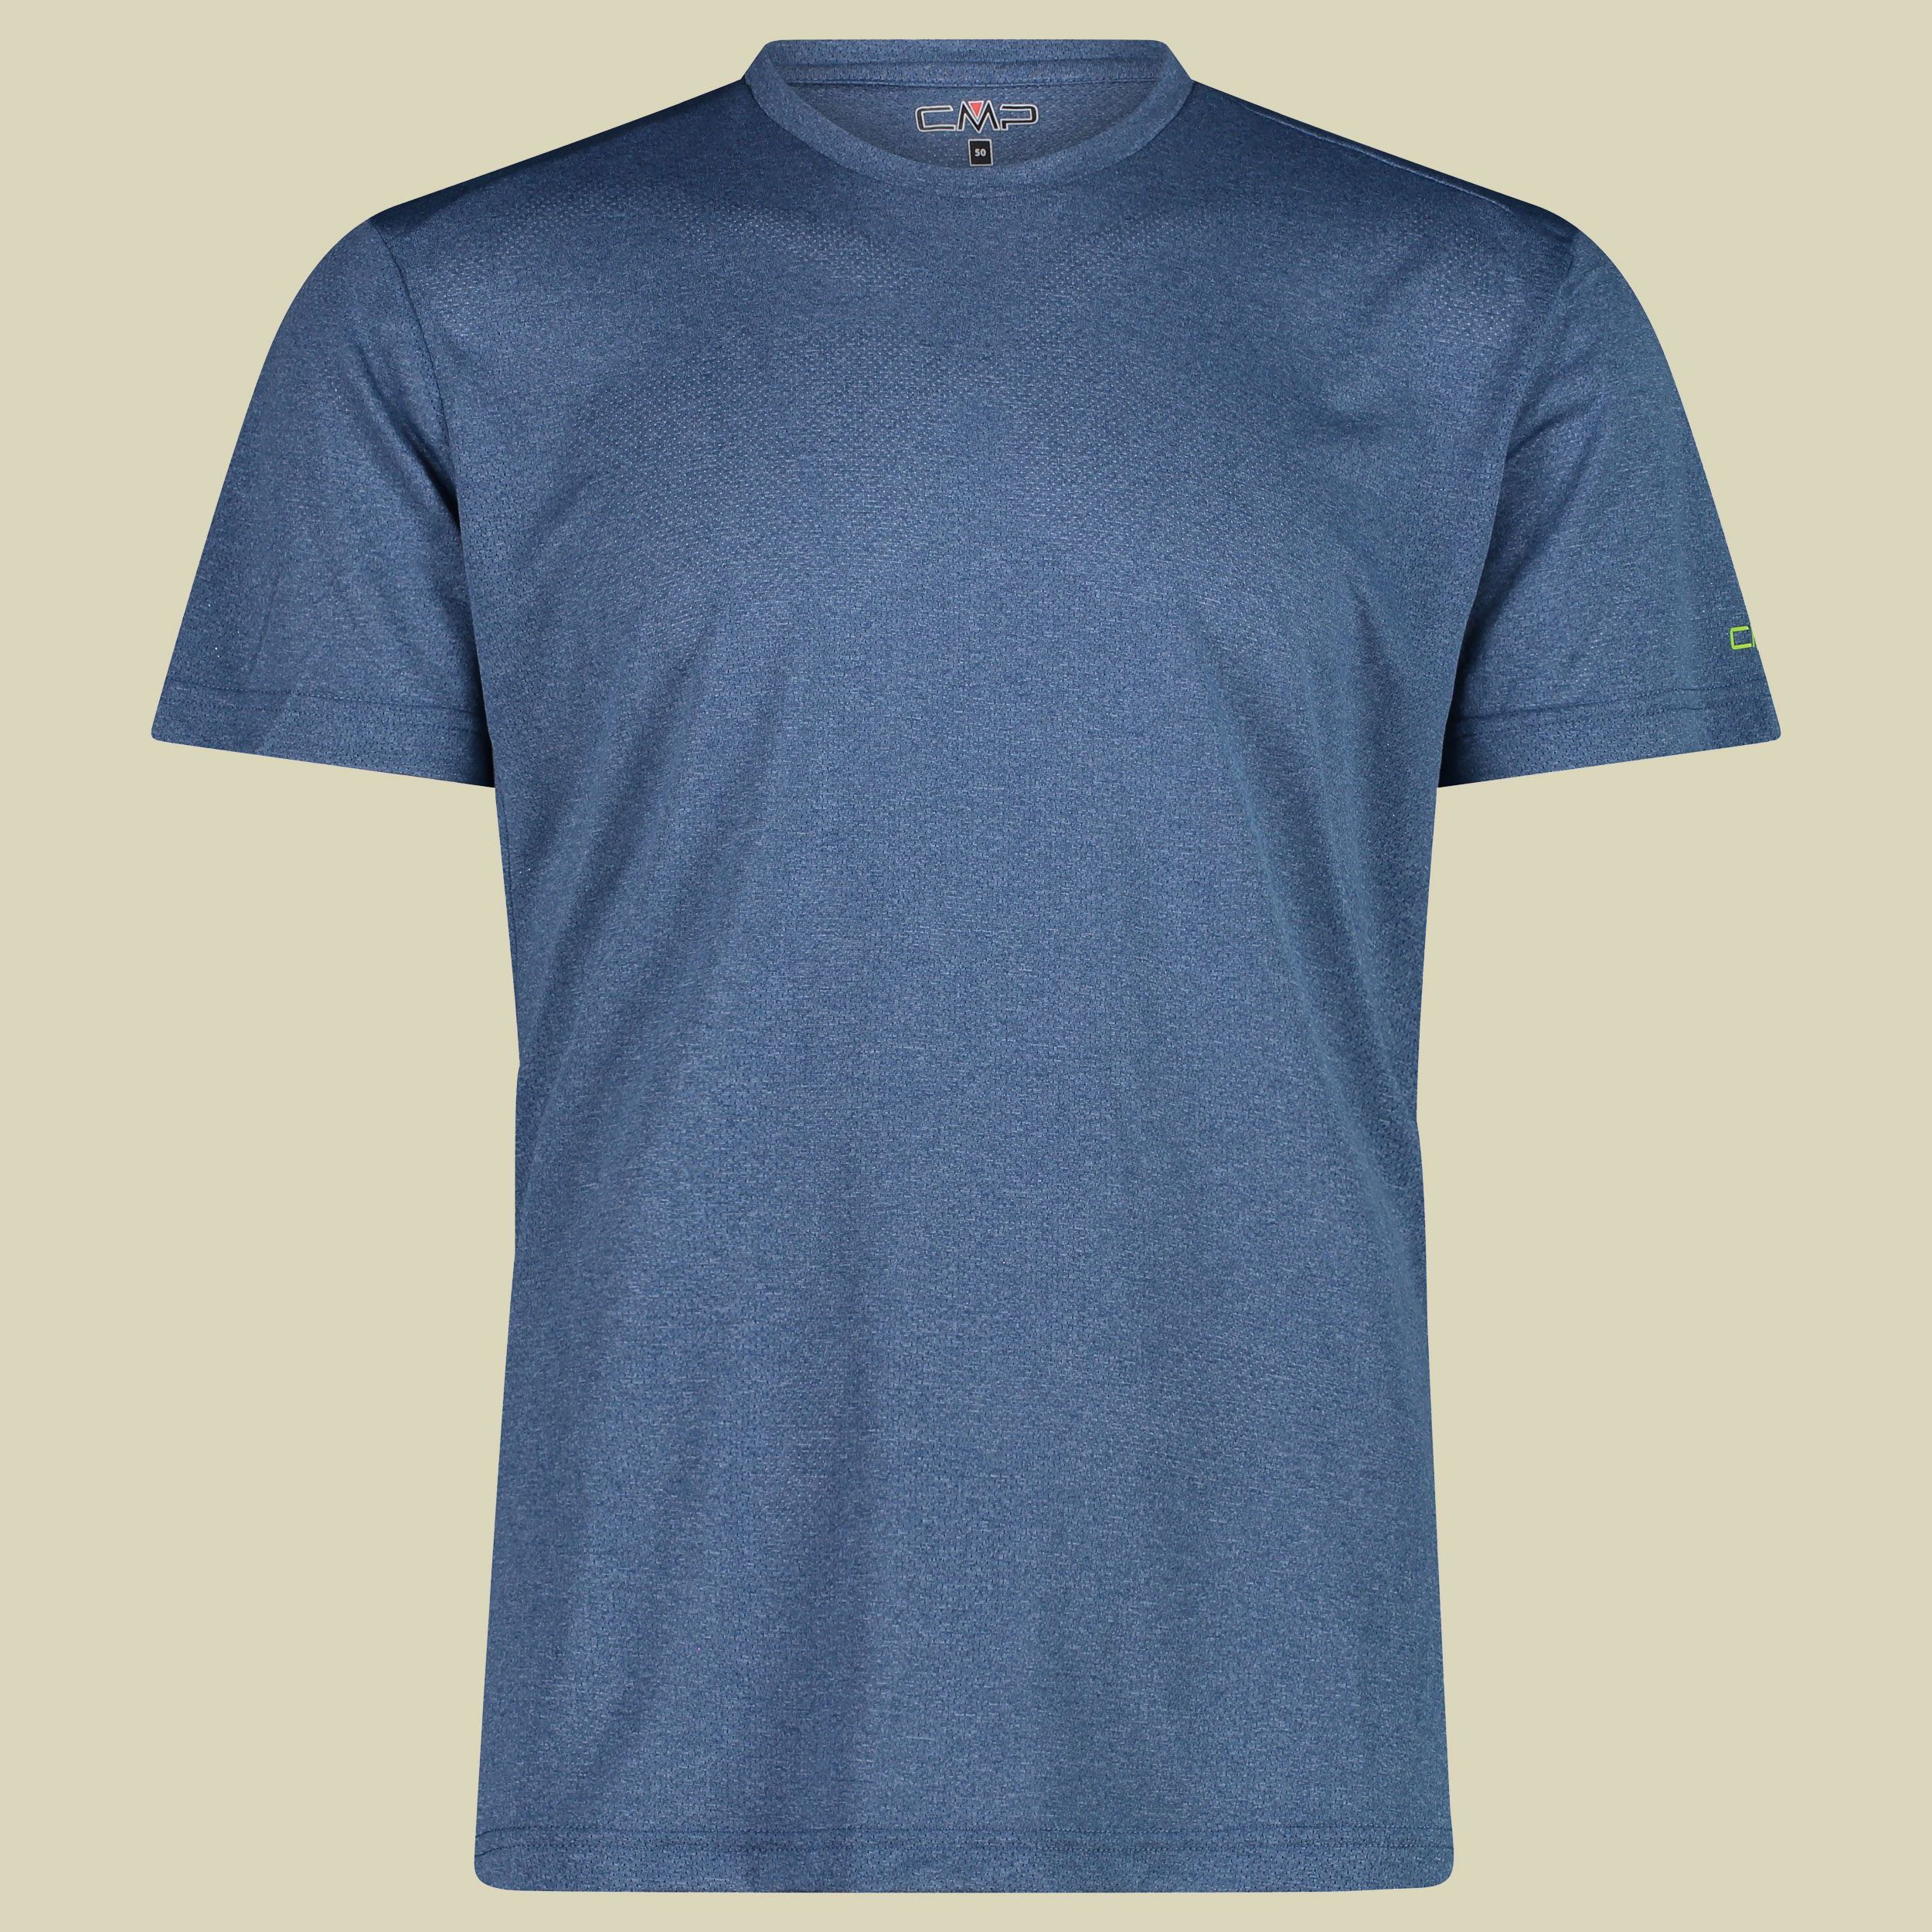 Man T-Shirt 31T5847 Größe 52 Farbe M879 dusty blue